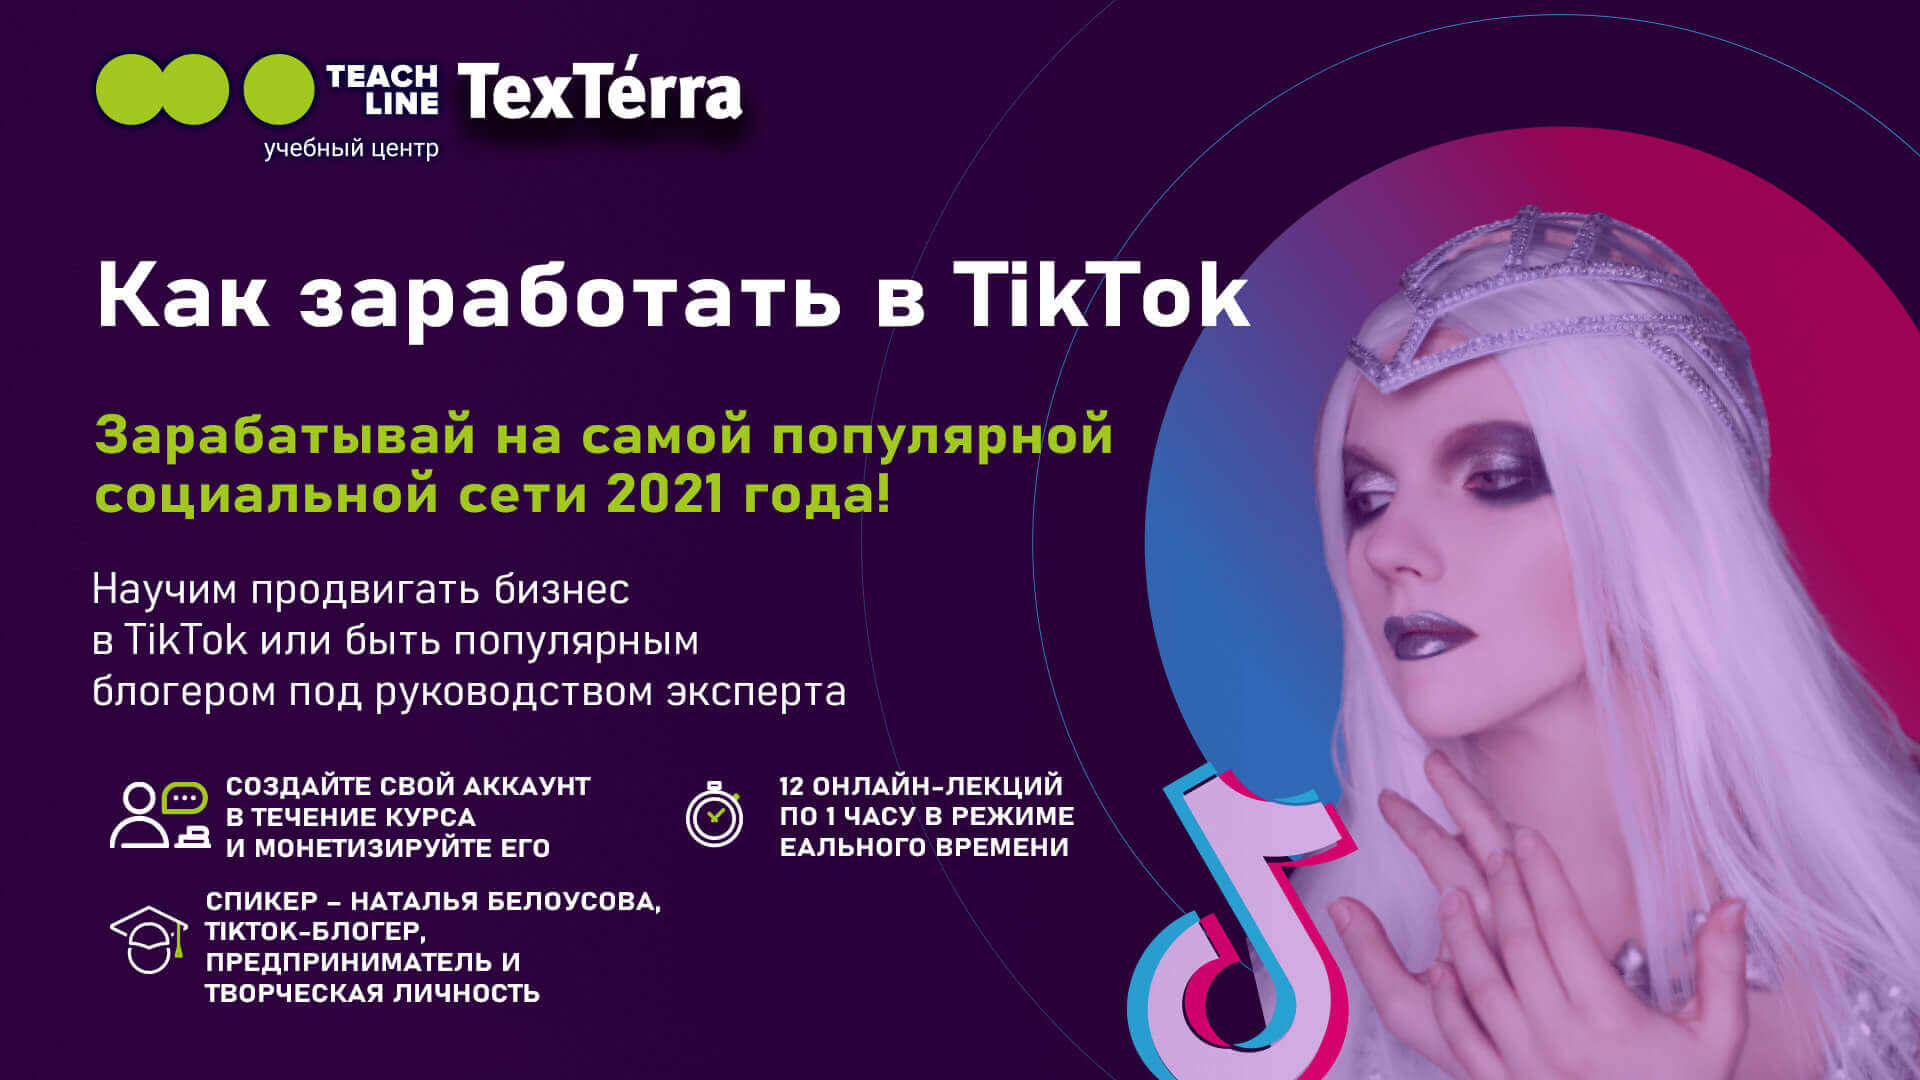 TexTerra — Как заработать в TikTok